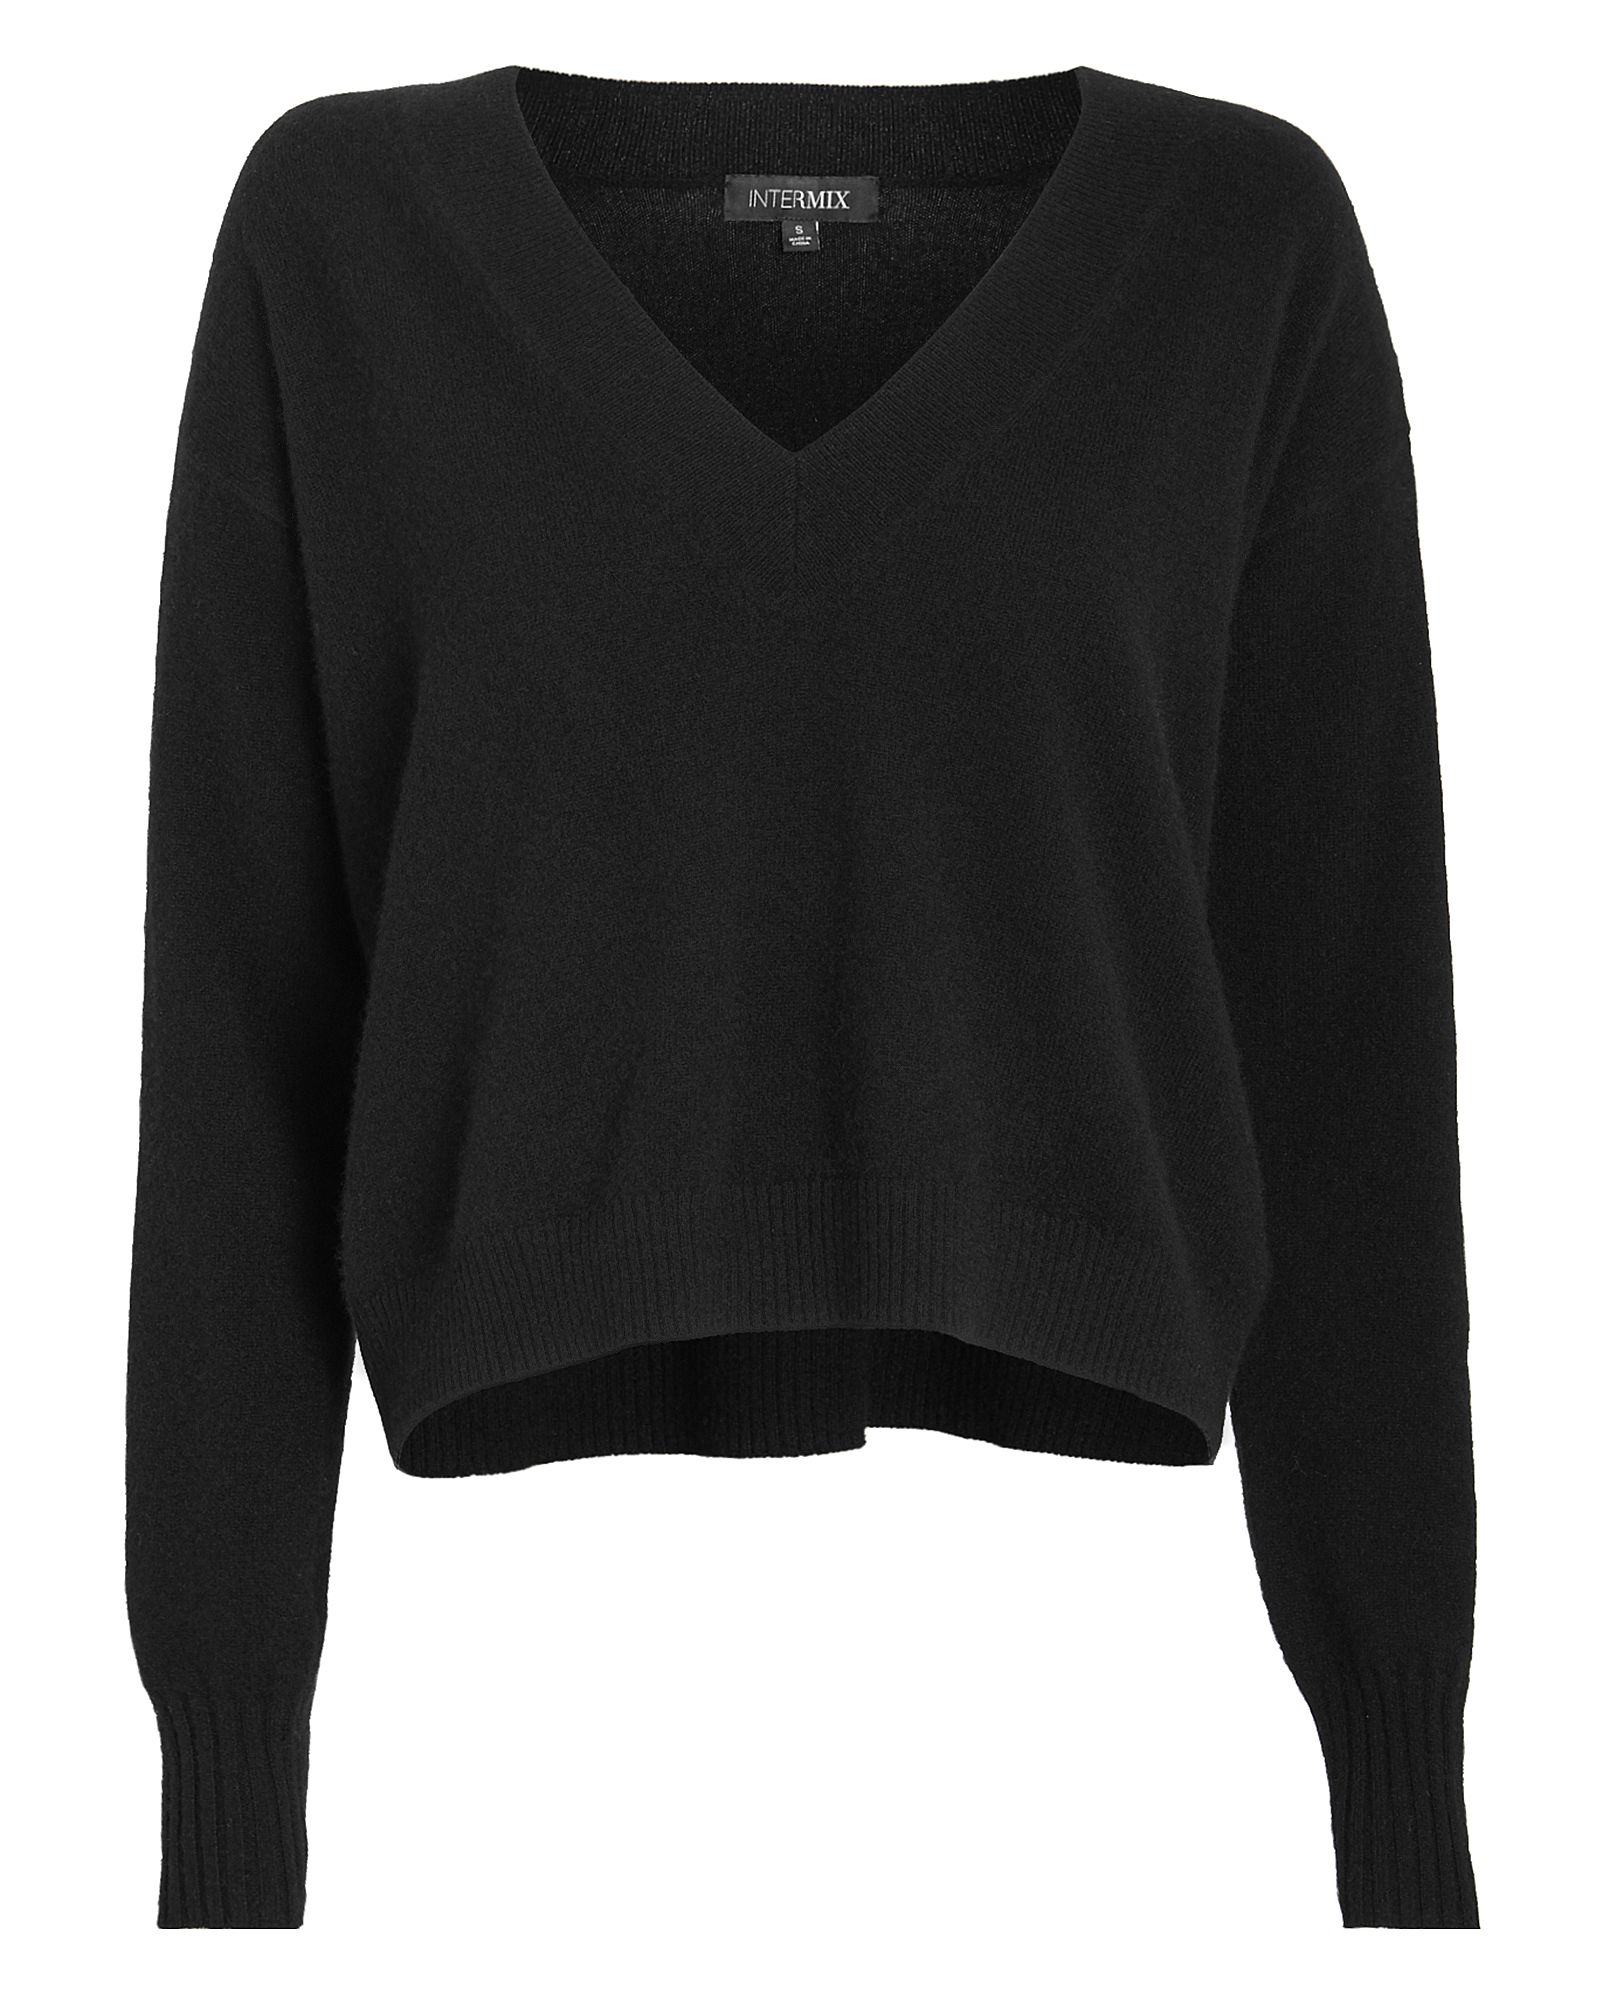 INTERMIX Private Label Elroy Cashmere Sweater | INTERMIX®